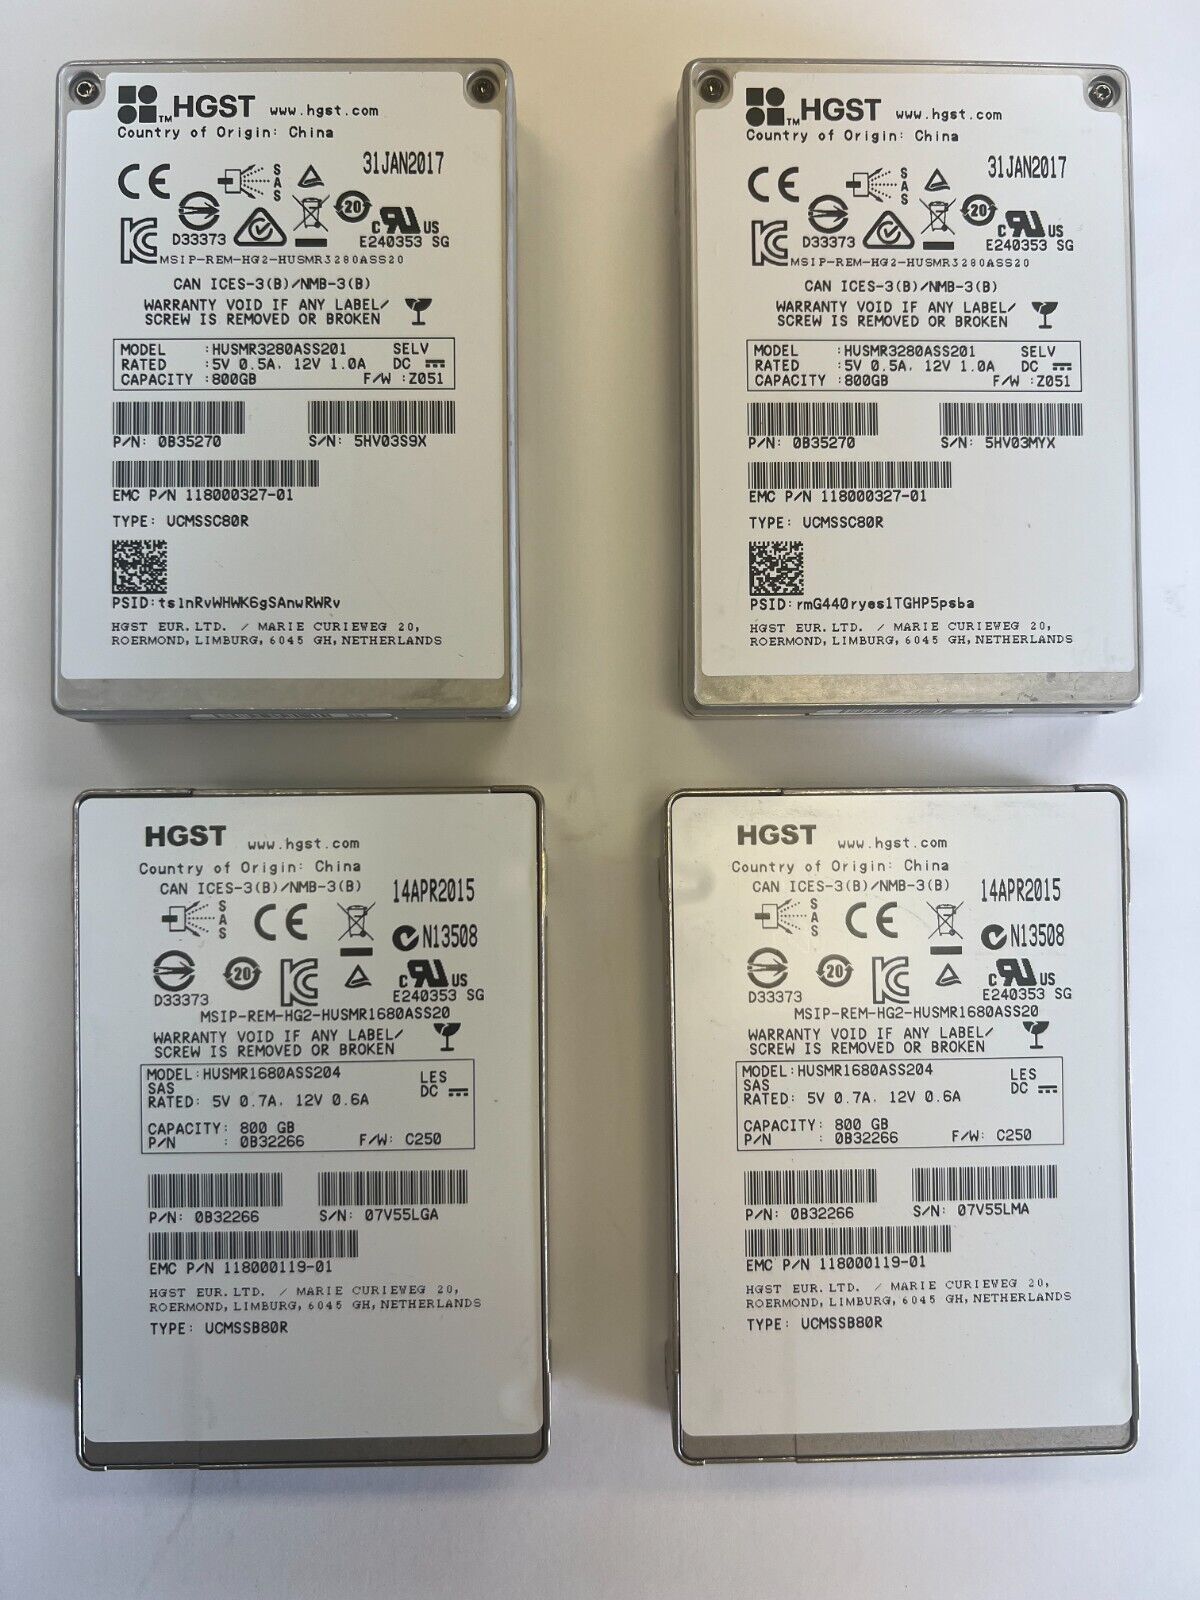 HGST EMC HUSMR1680ASS204/HUSMR3280ASS201 800GB SAS 3 2.5 Solid State Drive